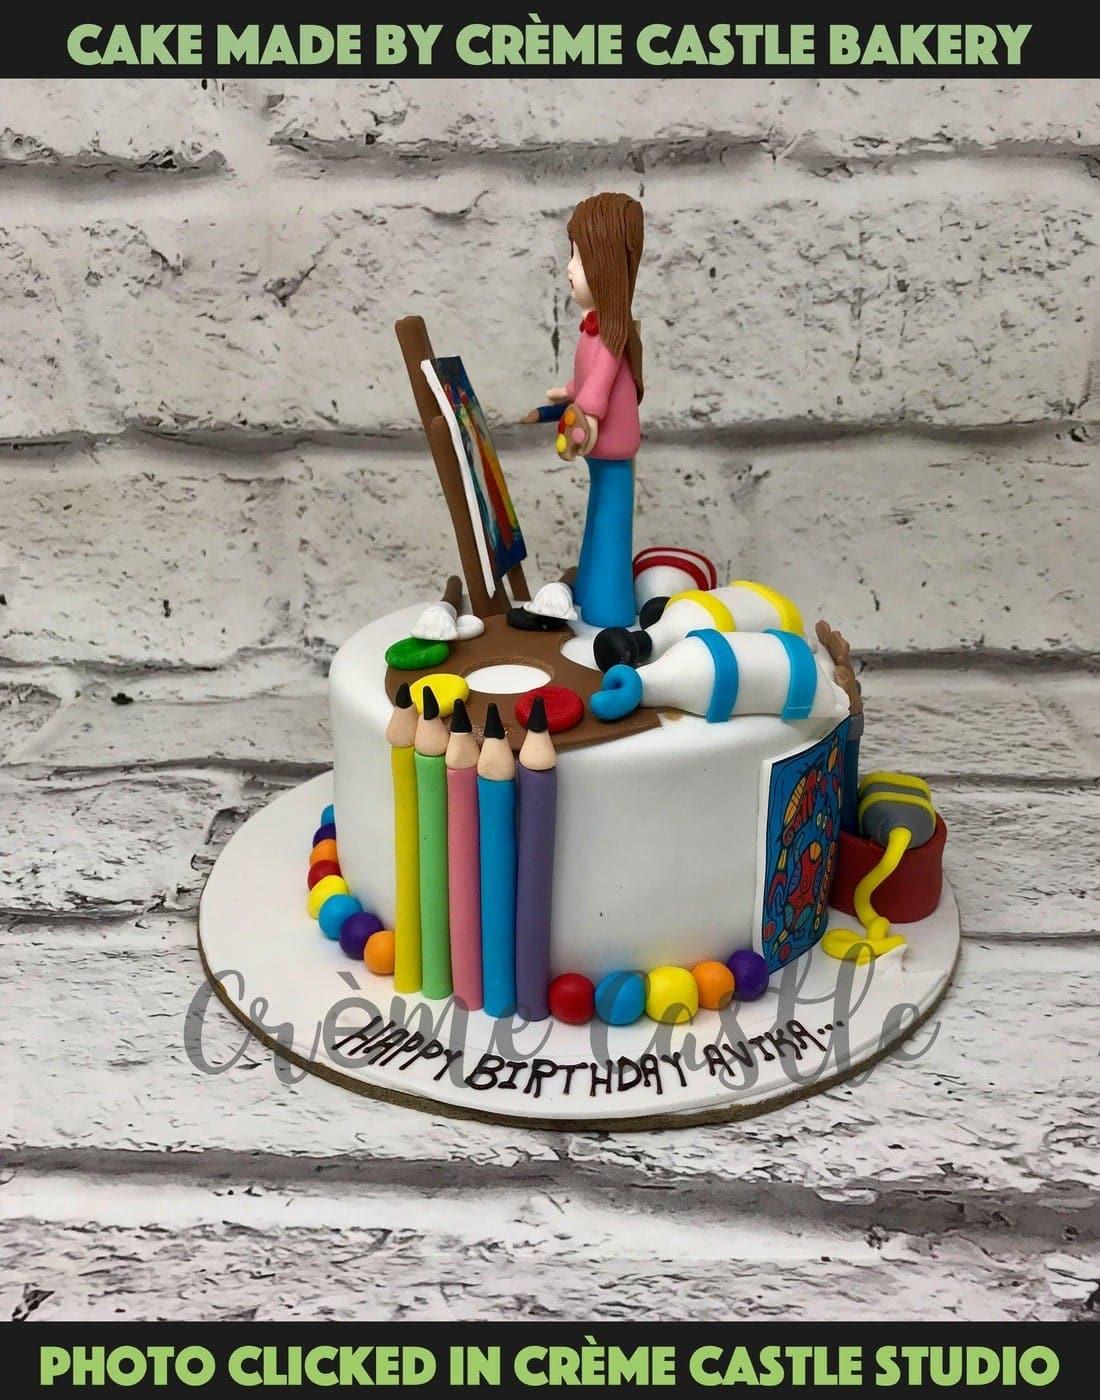 The Cake Art